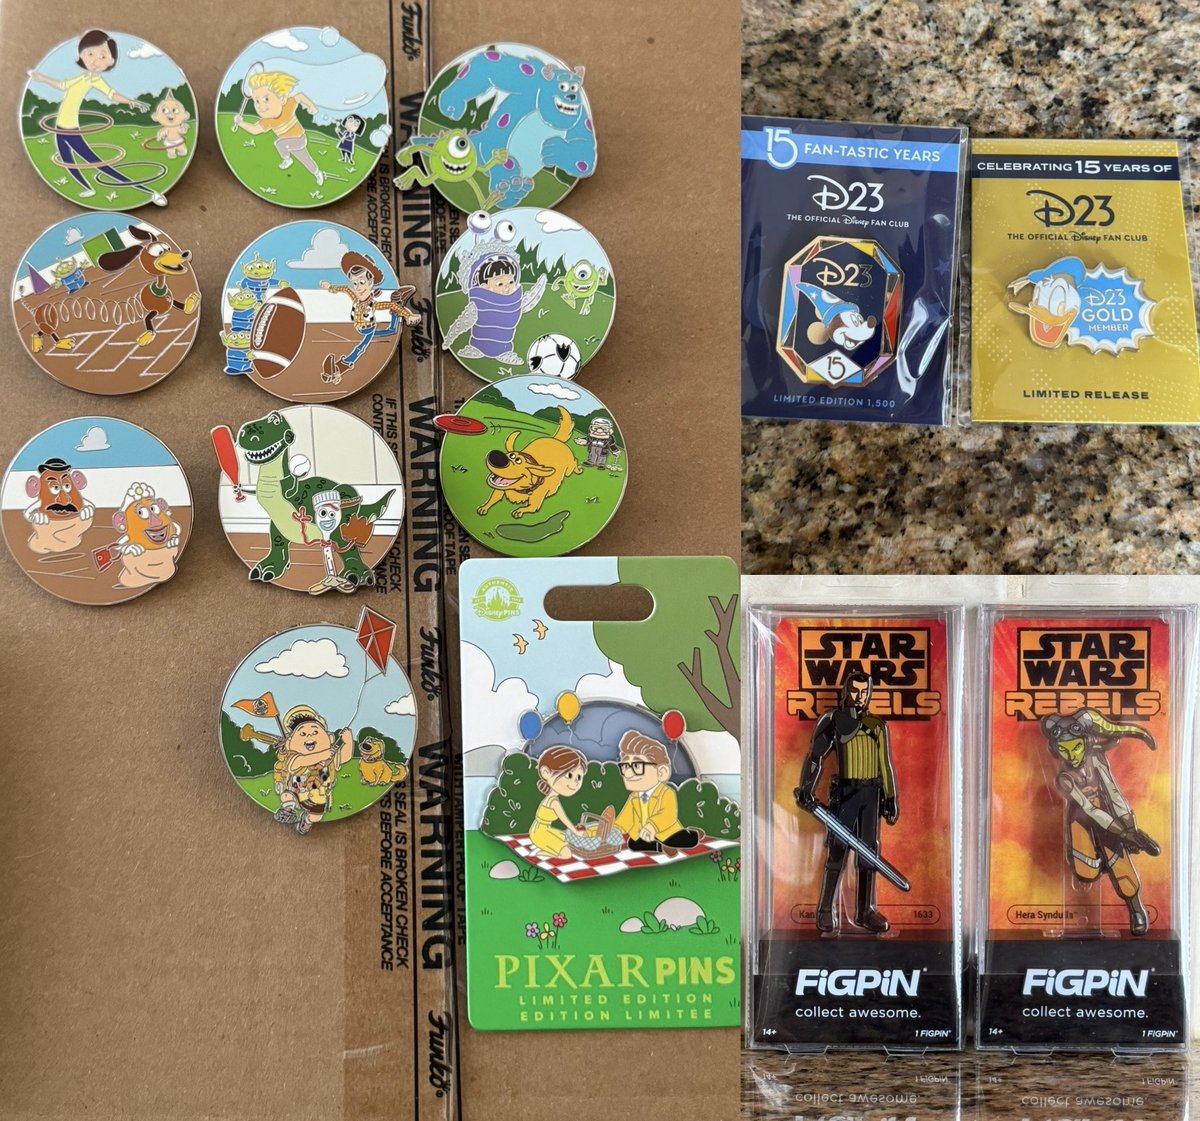 📭📦 Got a few new pins!
.
#Disney #StarWars #Pixar #D23 #Pins #Pin #DisneyPins #DisneyPinTrading #Collectibles #Collector #EnamelPin #EnamelPins #DisTrackers #FiGPiN #FiGPiNs